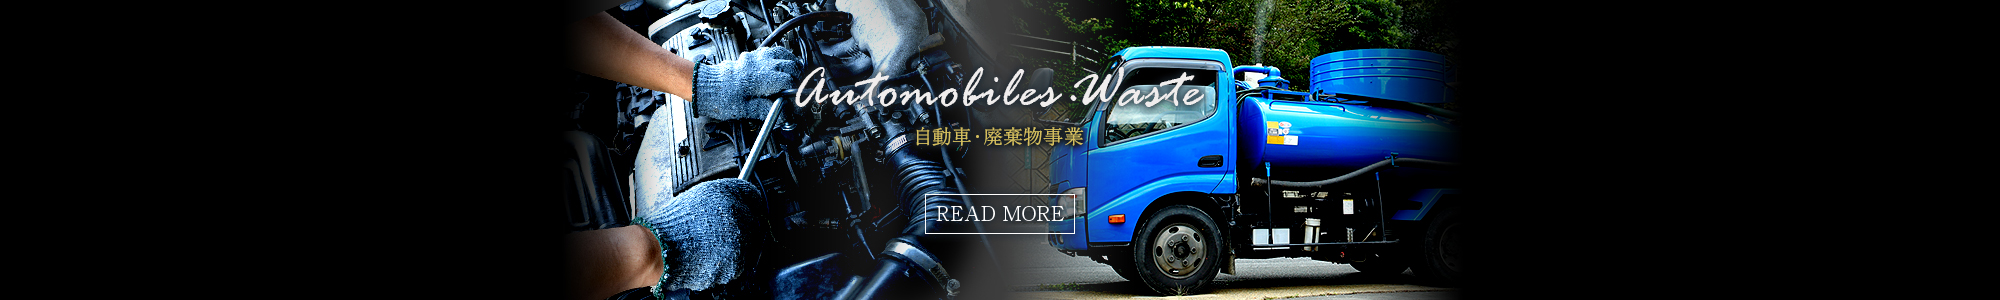 Automobiles_Waste_banner